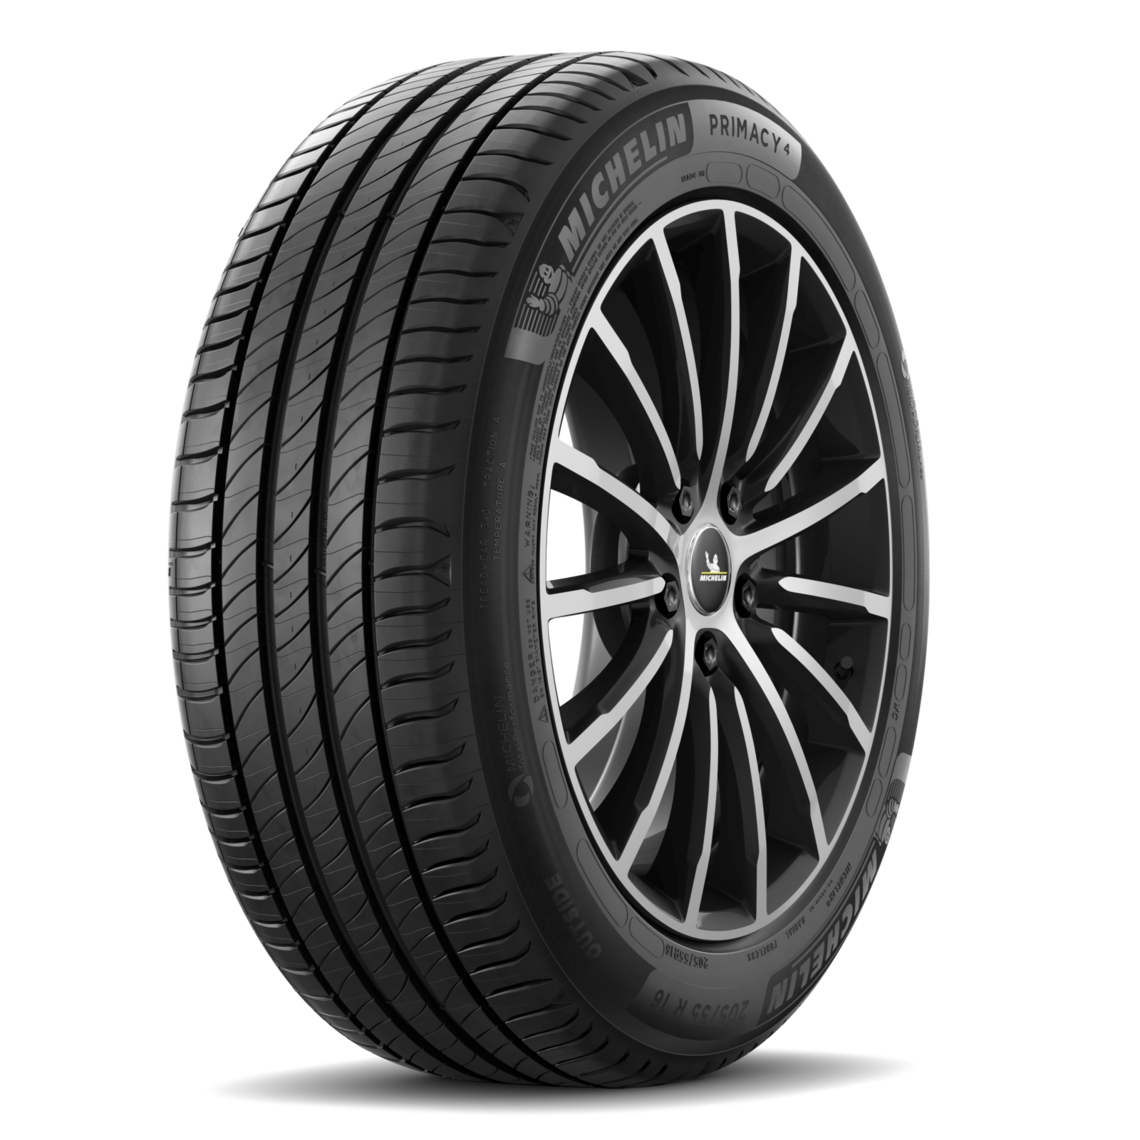 Easy Grip Michelin Evo 12 pneu 215-55-18 225-55-18 235-50-18